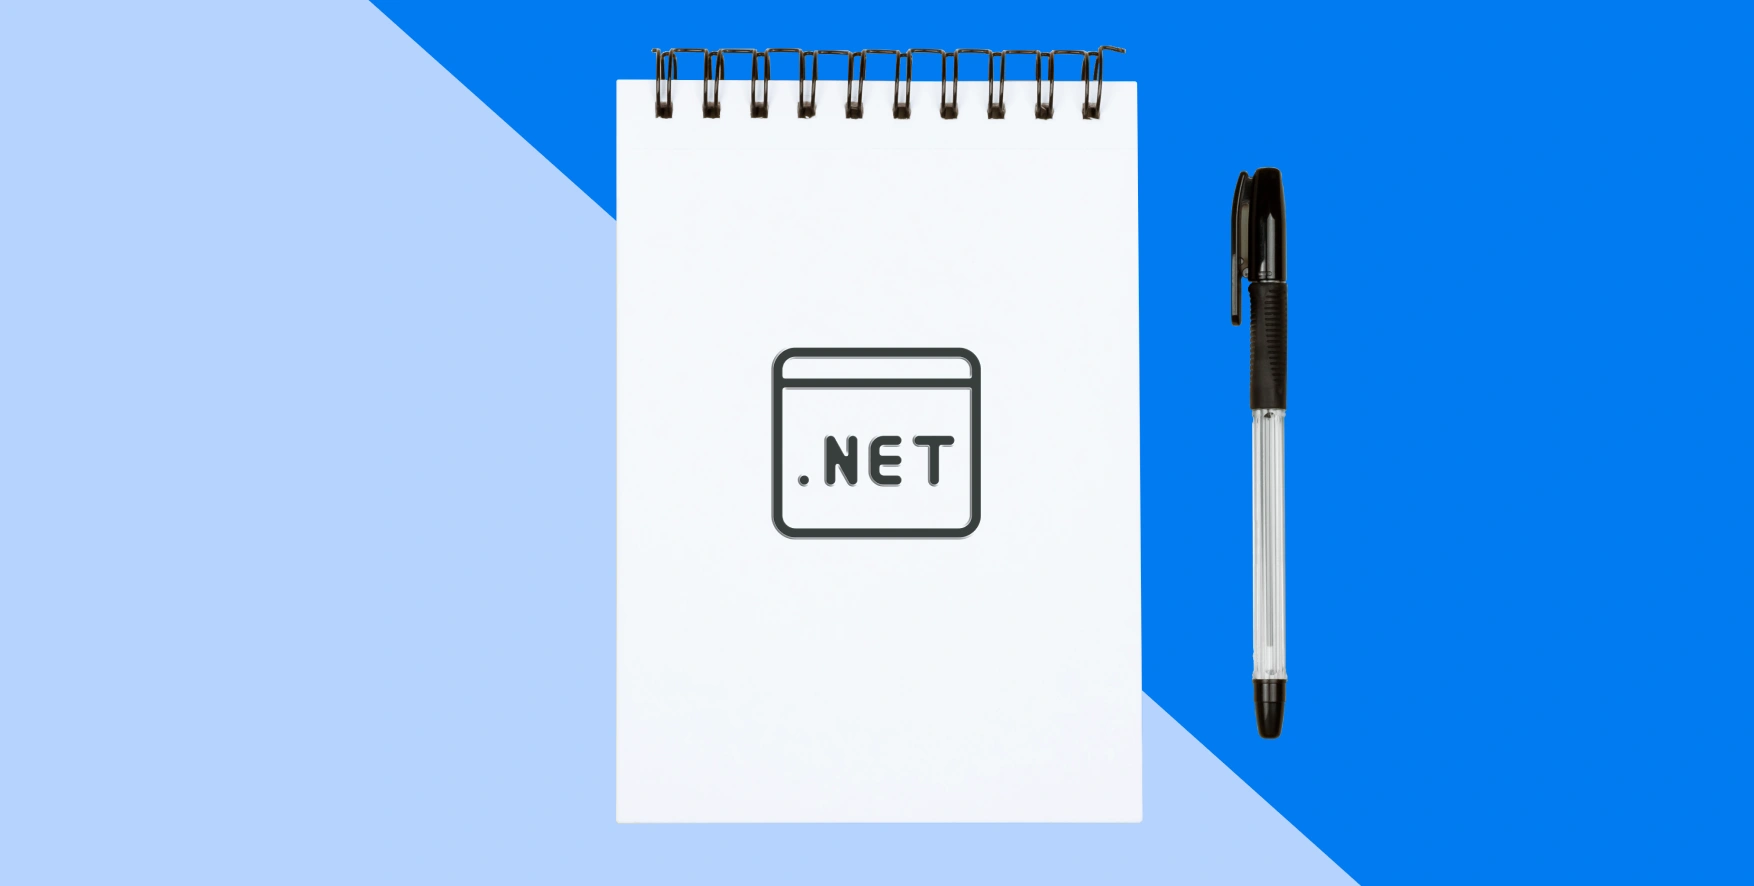 .NET written on a piece of notepad